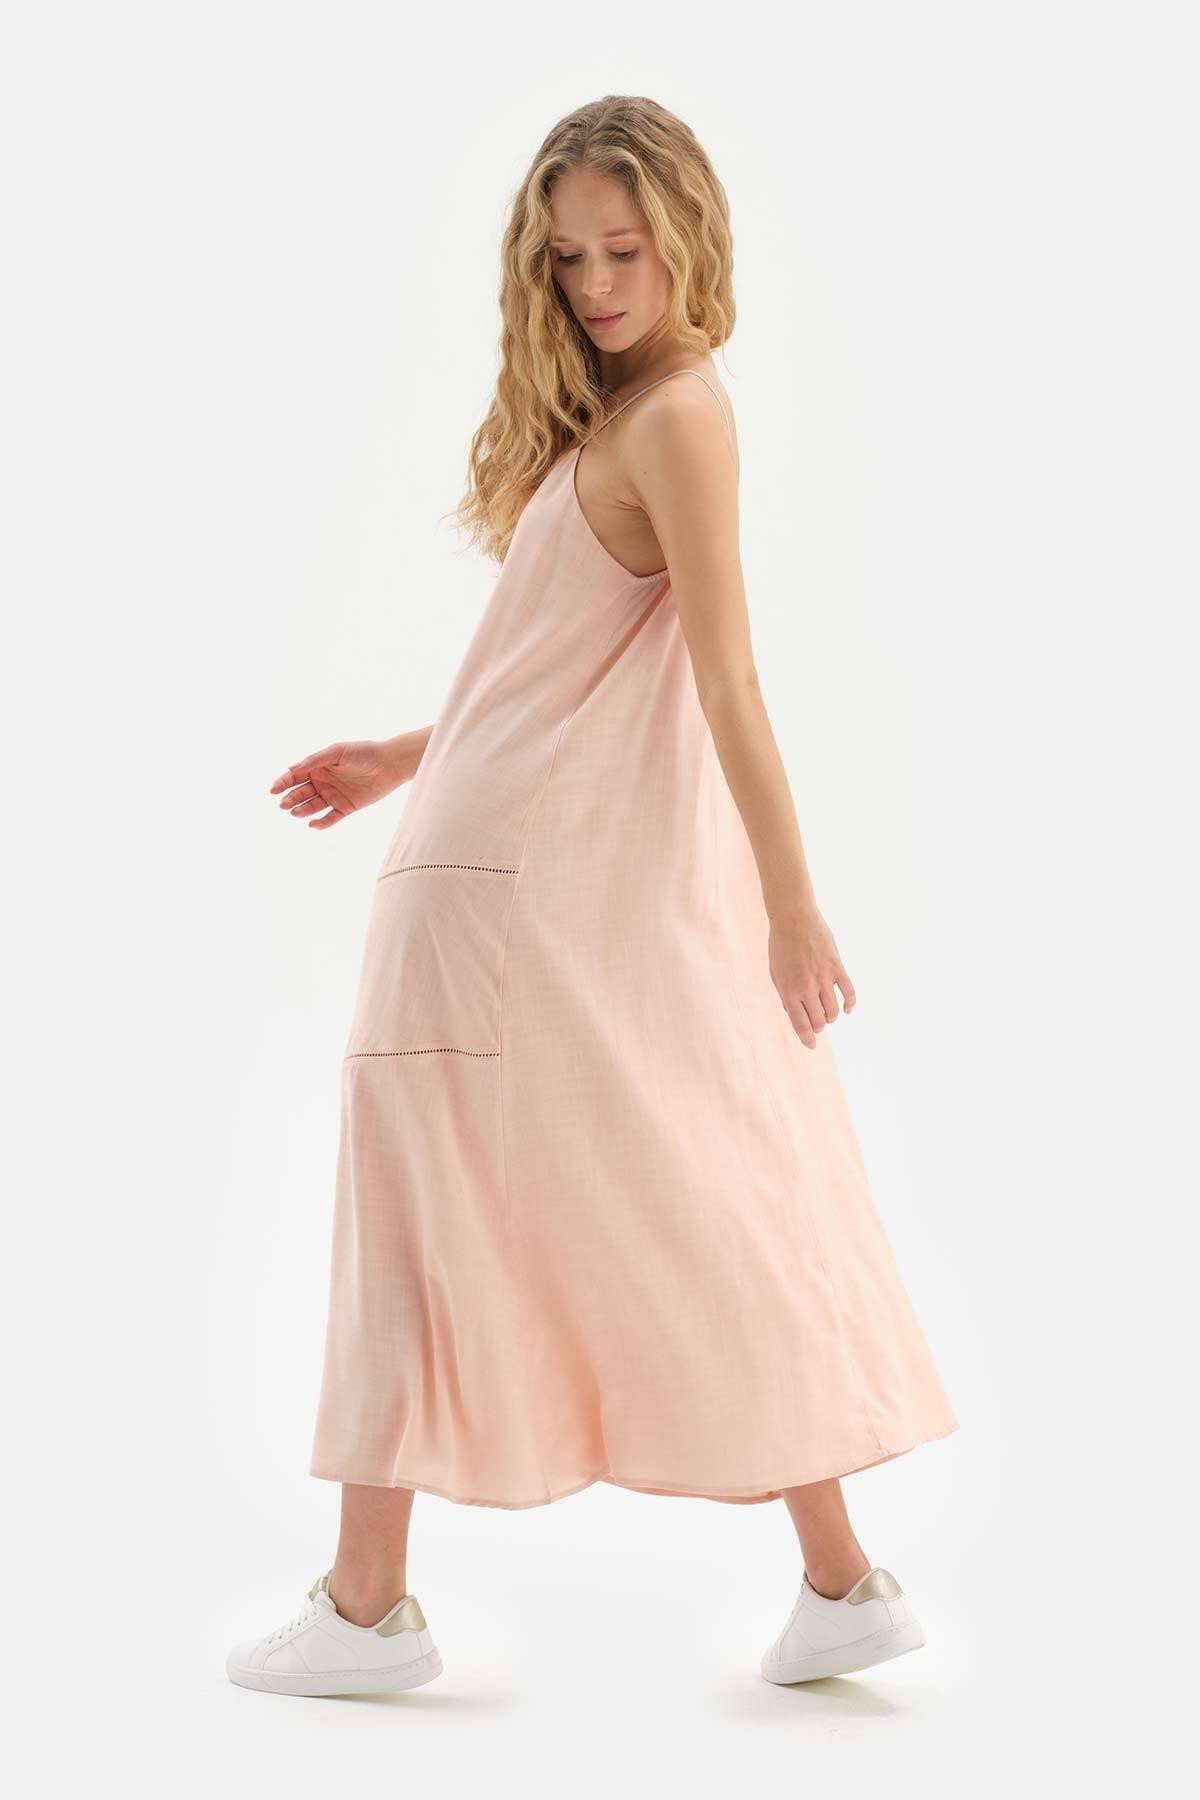 Dagi - Pink Openwork Woven Dress